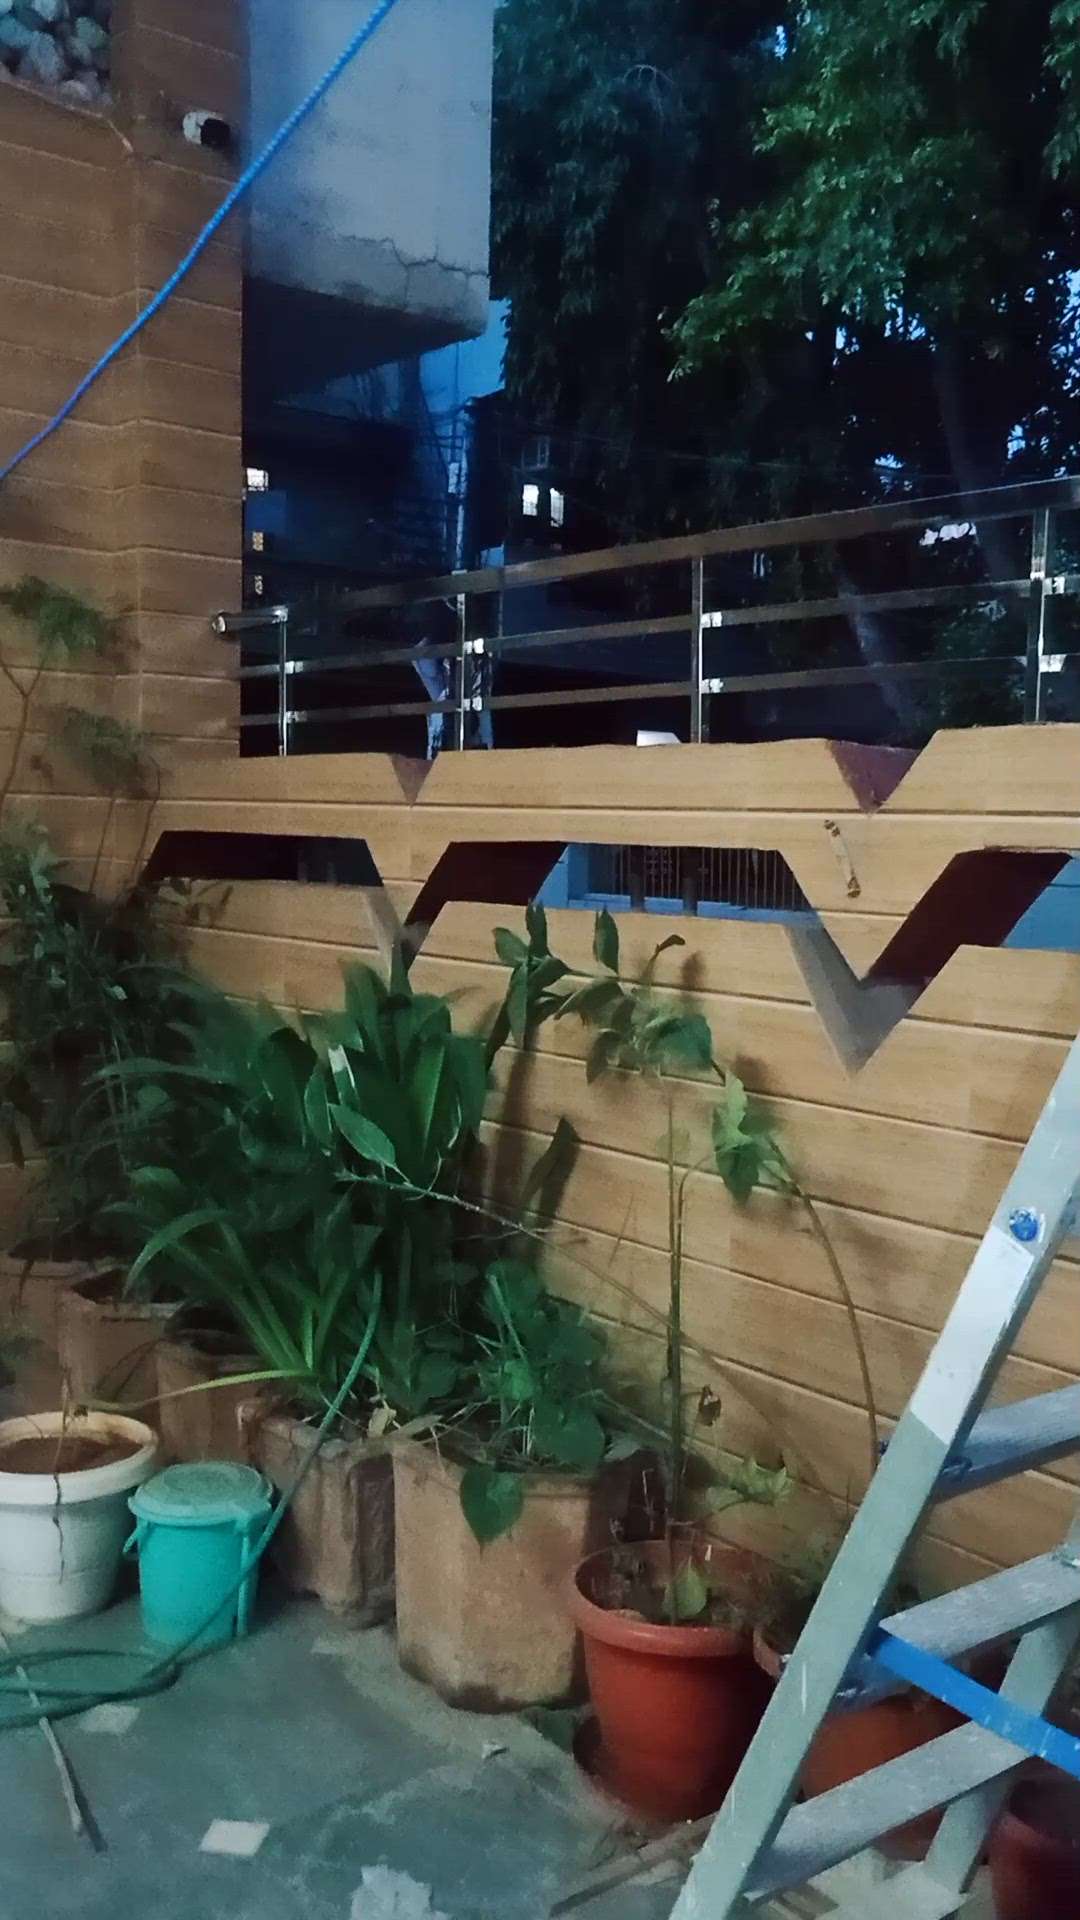 s.s railing complete